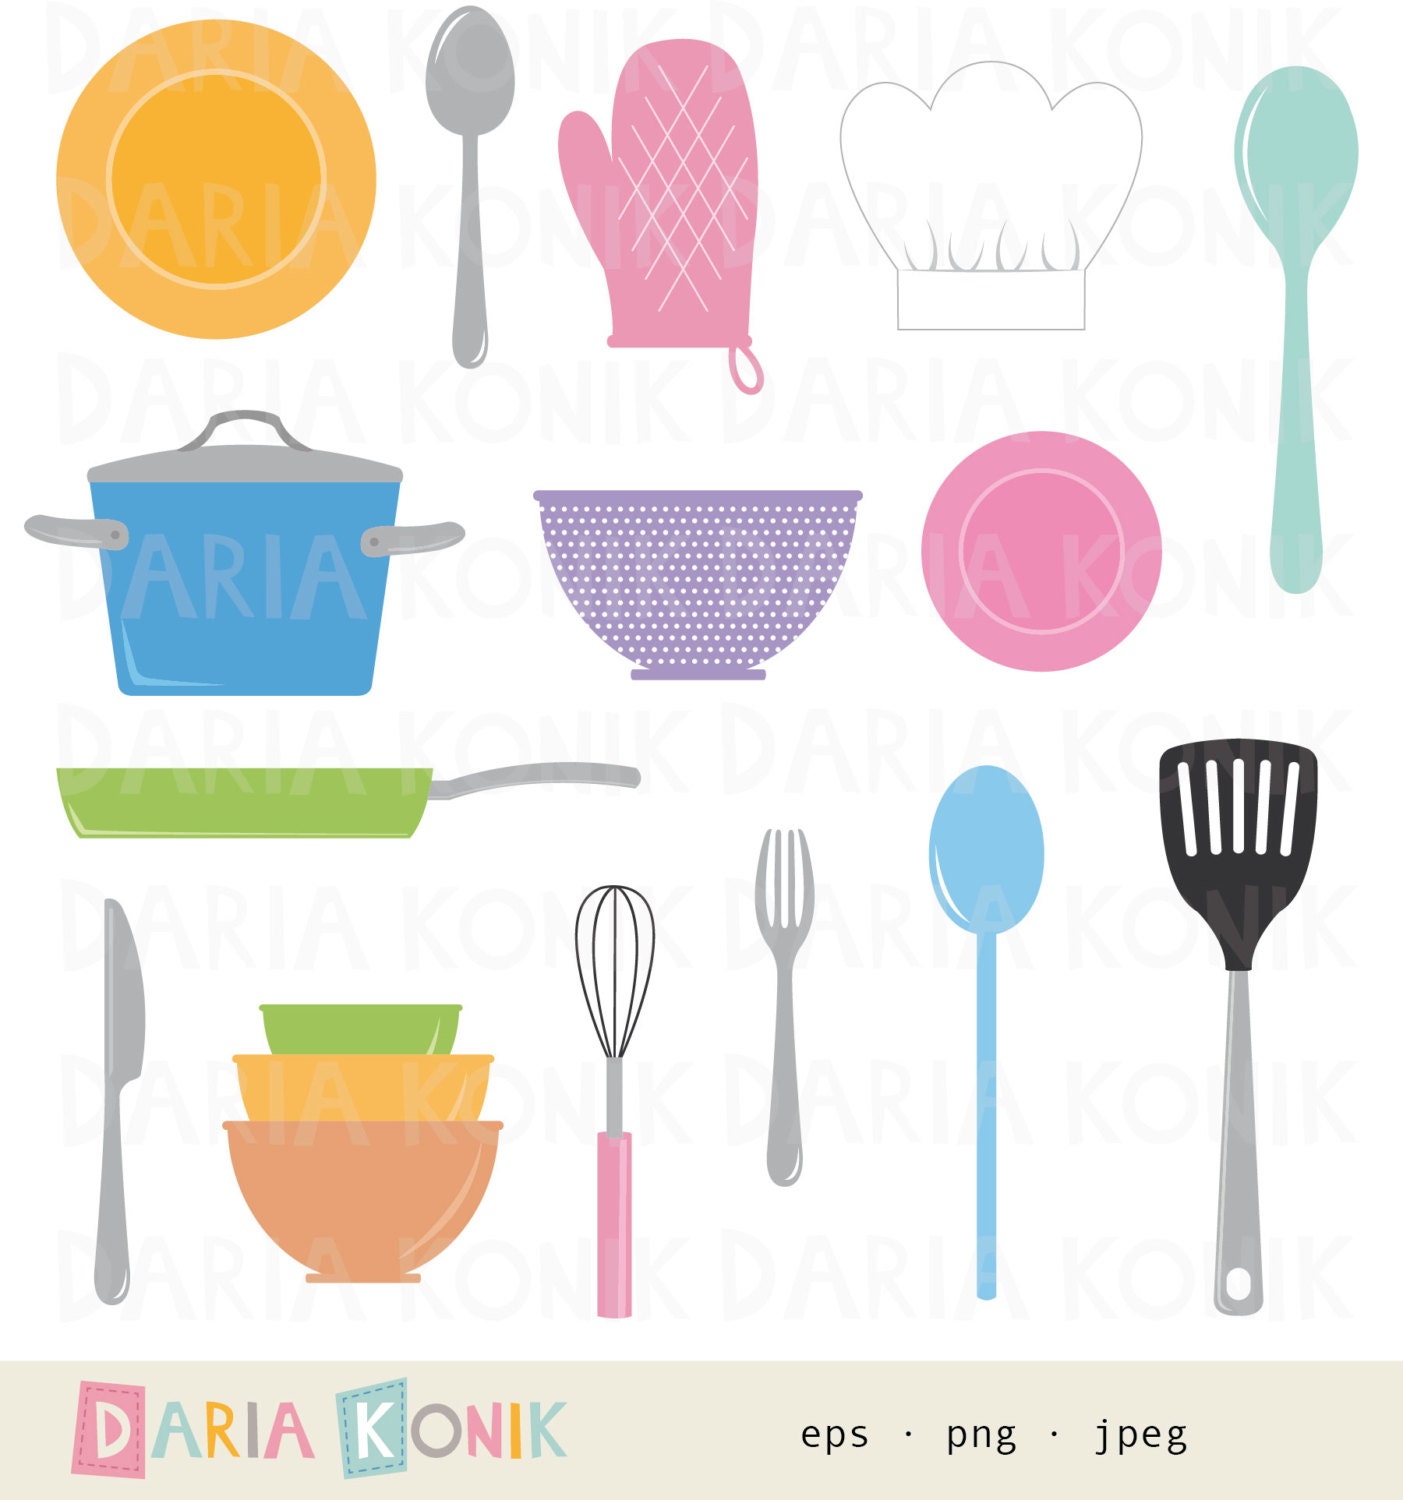 free clipart of kitchen utensils - photo #50